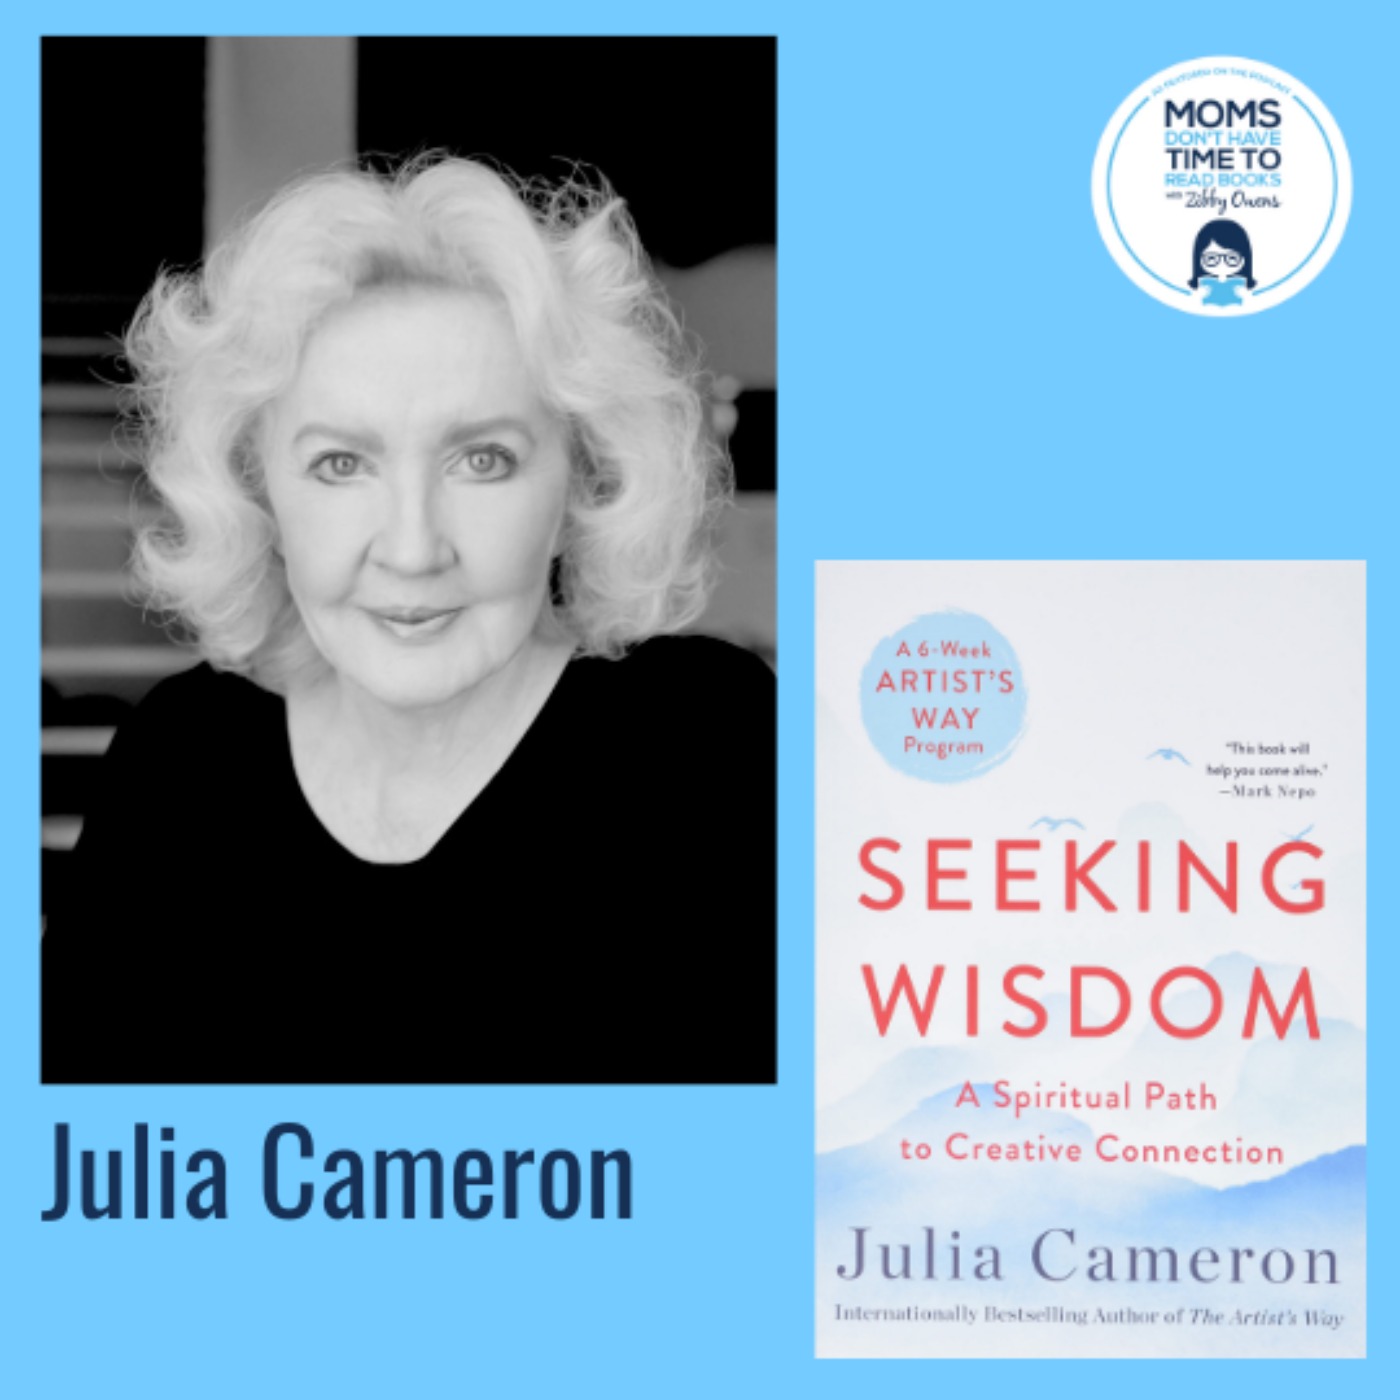 Julia Cameron, SEEKING WISDOM: A Spiritual Path to Creative Connection (A Six-Week Artist's Way Program)